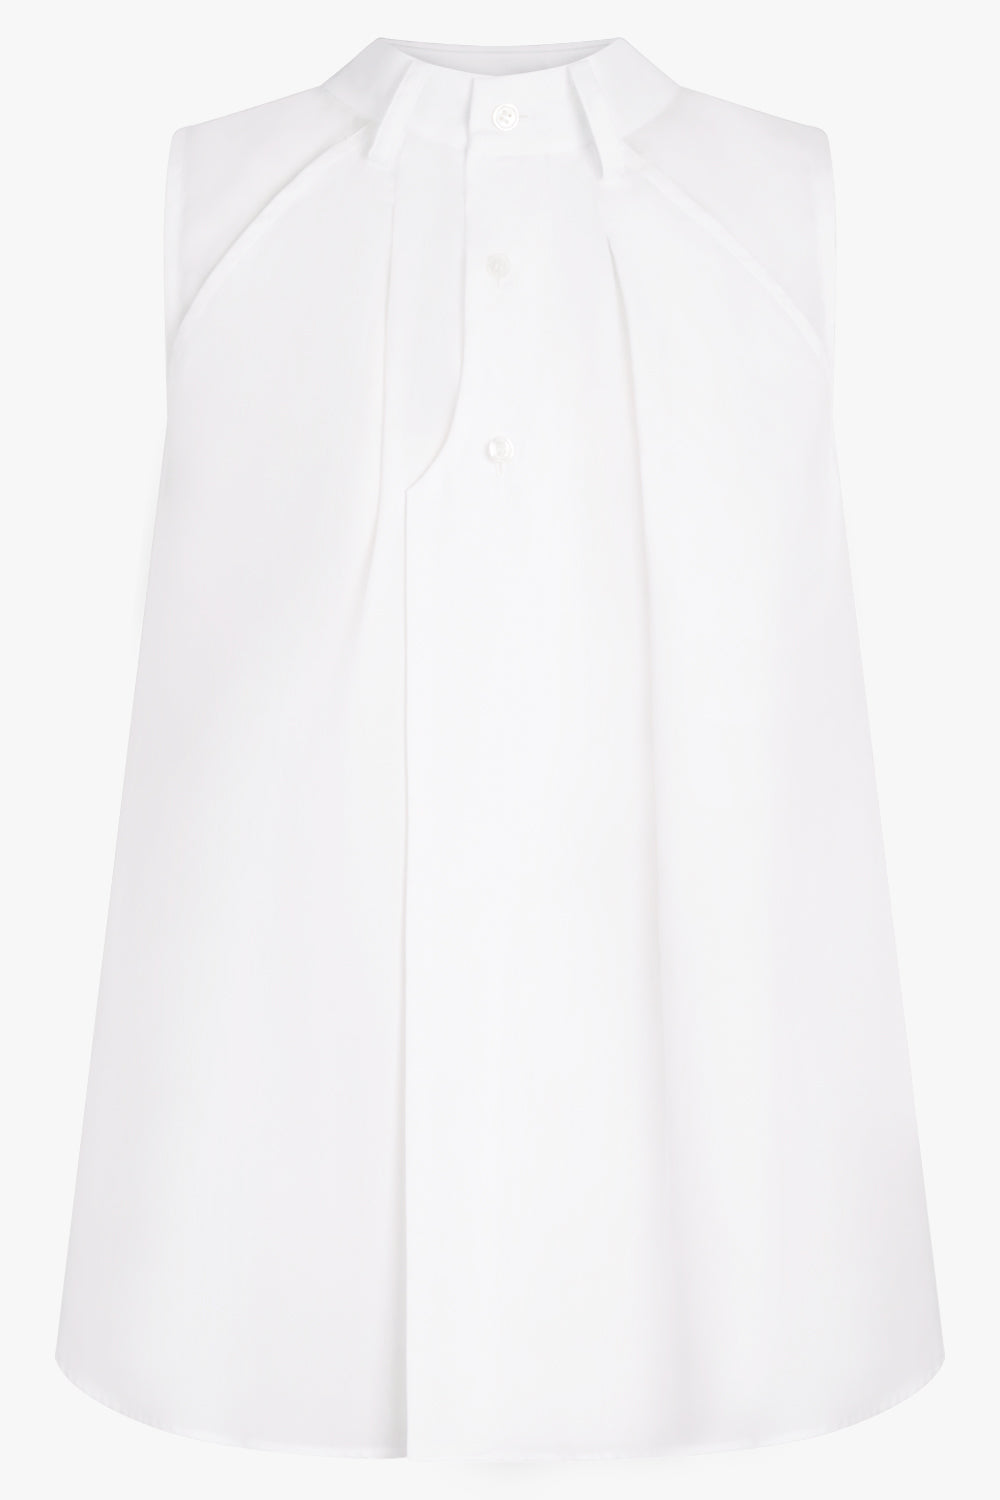 NOIR KEI NINOMIYA RTW Waistband Detail Sleeveless Blouse | White